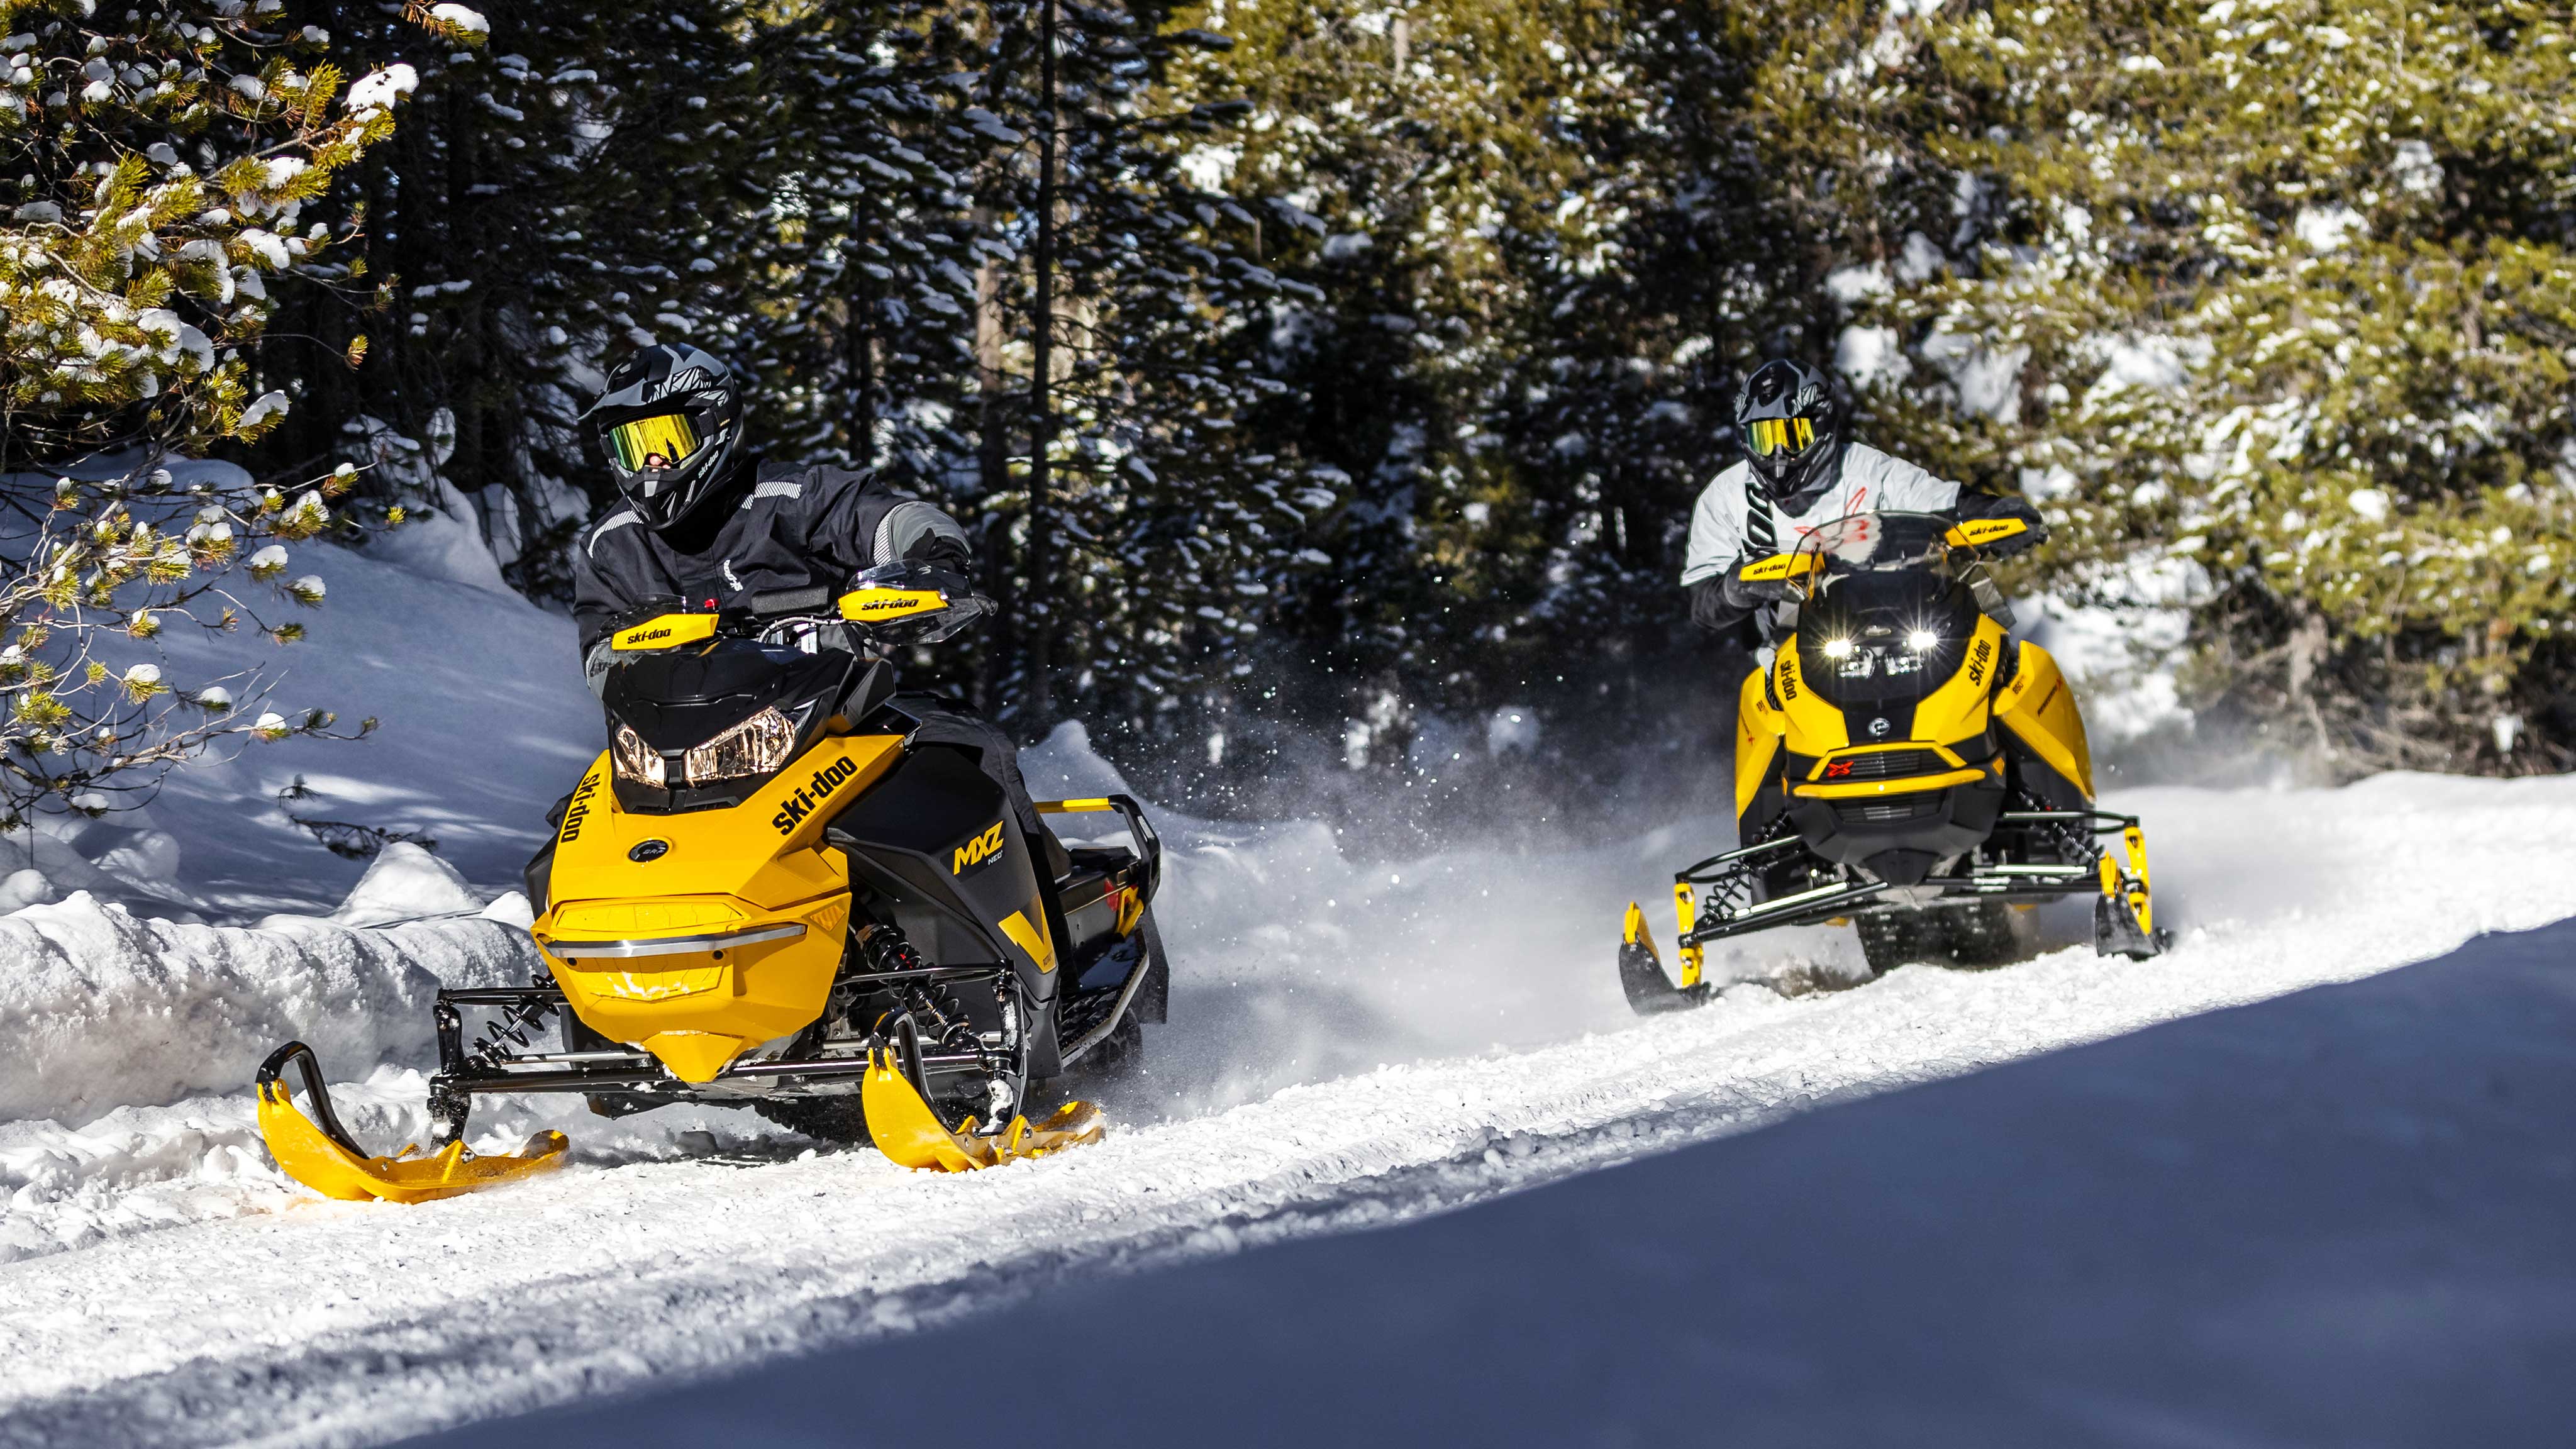 Two man riding Ski-Doo snowmobiles in trail